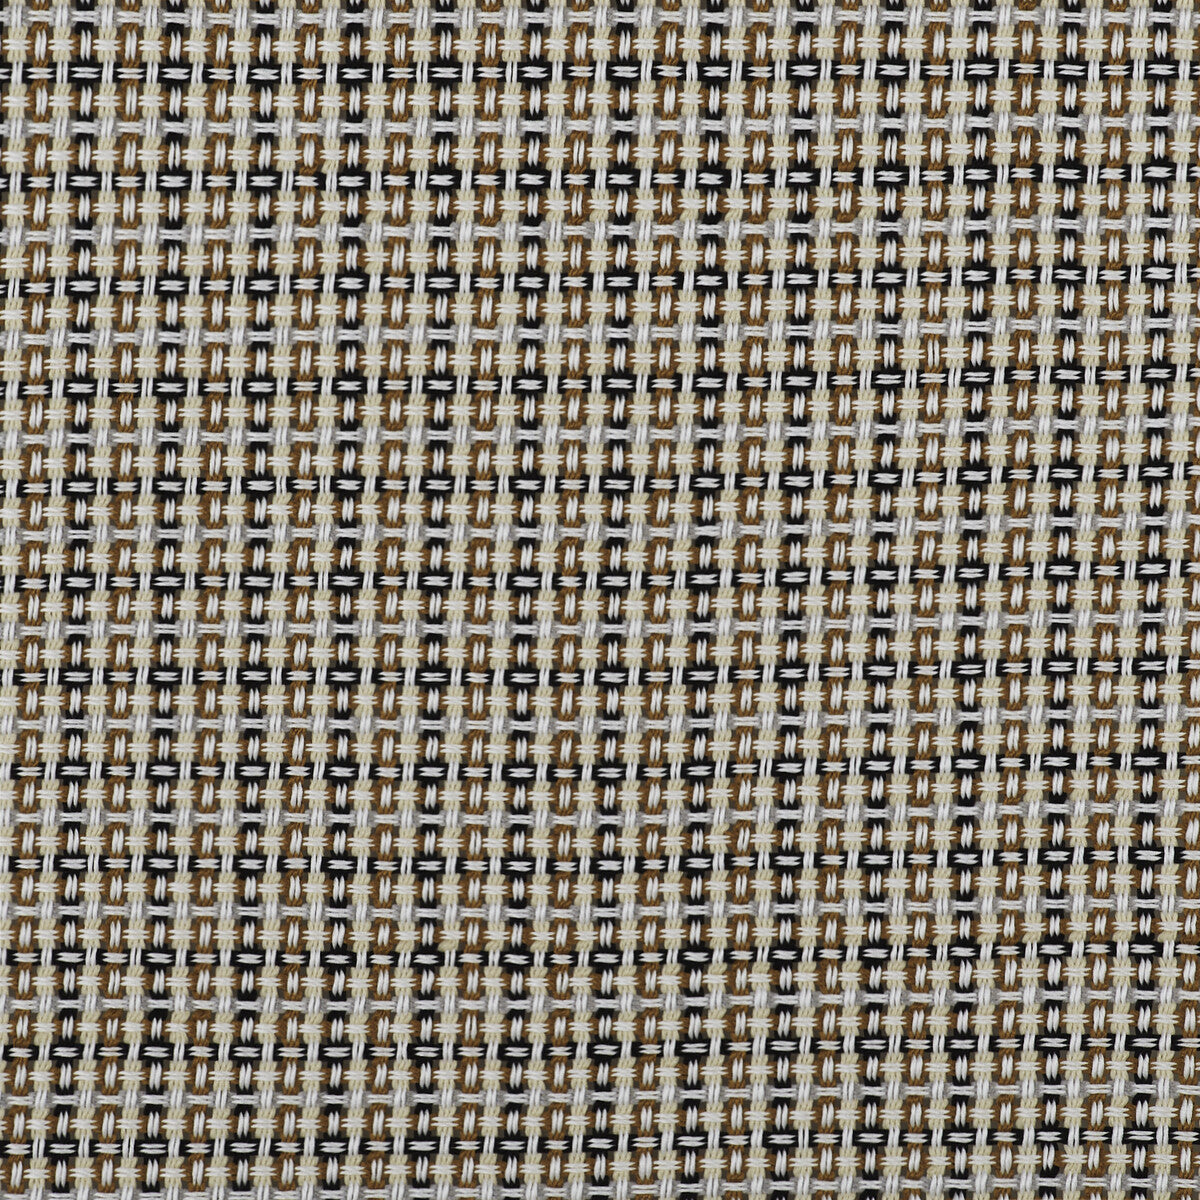 Kf Gyd fabric - pattern LCT1006.002.0 - by Gaston y Daniela in the Lorenzo Castillo V collection